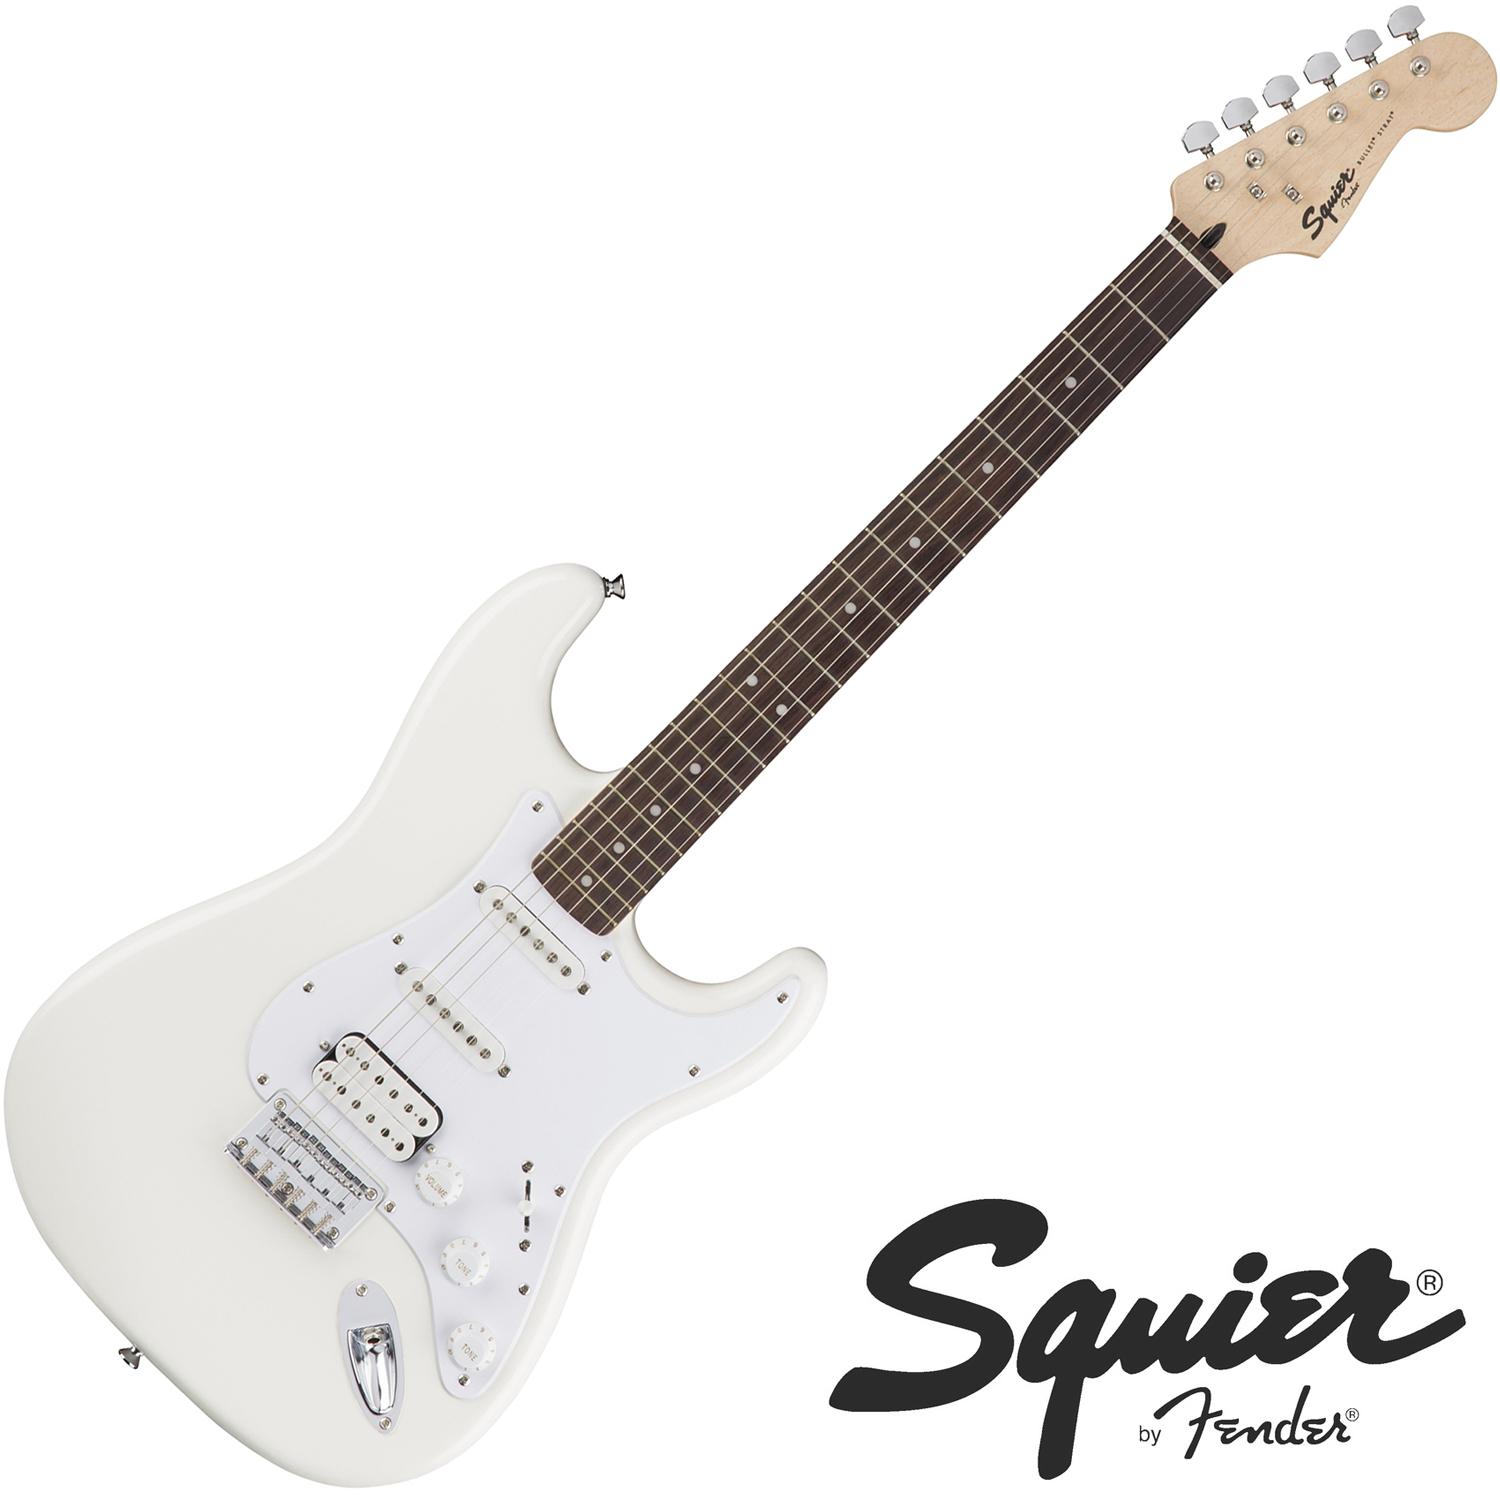 Fender® Squier Bullet Strat HSS กีตาร์ไฟฟ้า ทรง Strat ไม้เบสวู้ด ปิ๊กอัพผสม (สี Artic White) + แถมฟรีคันโยก ** ประกันศูนย์ 1 ปี **